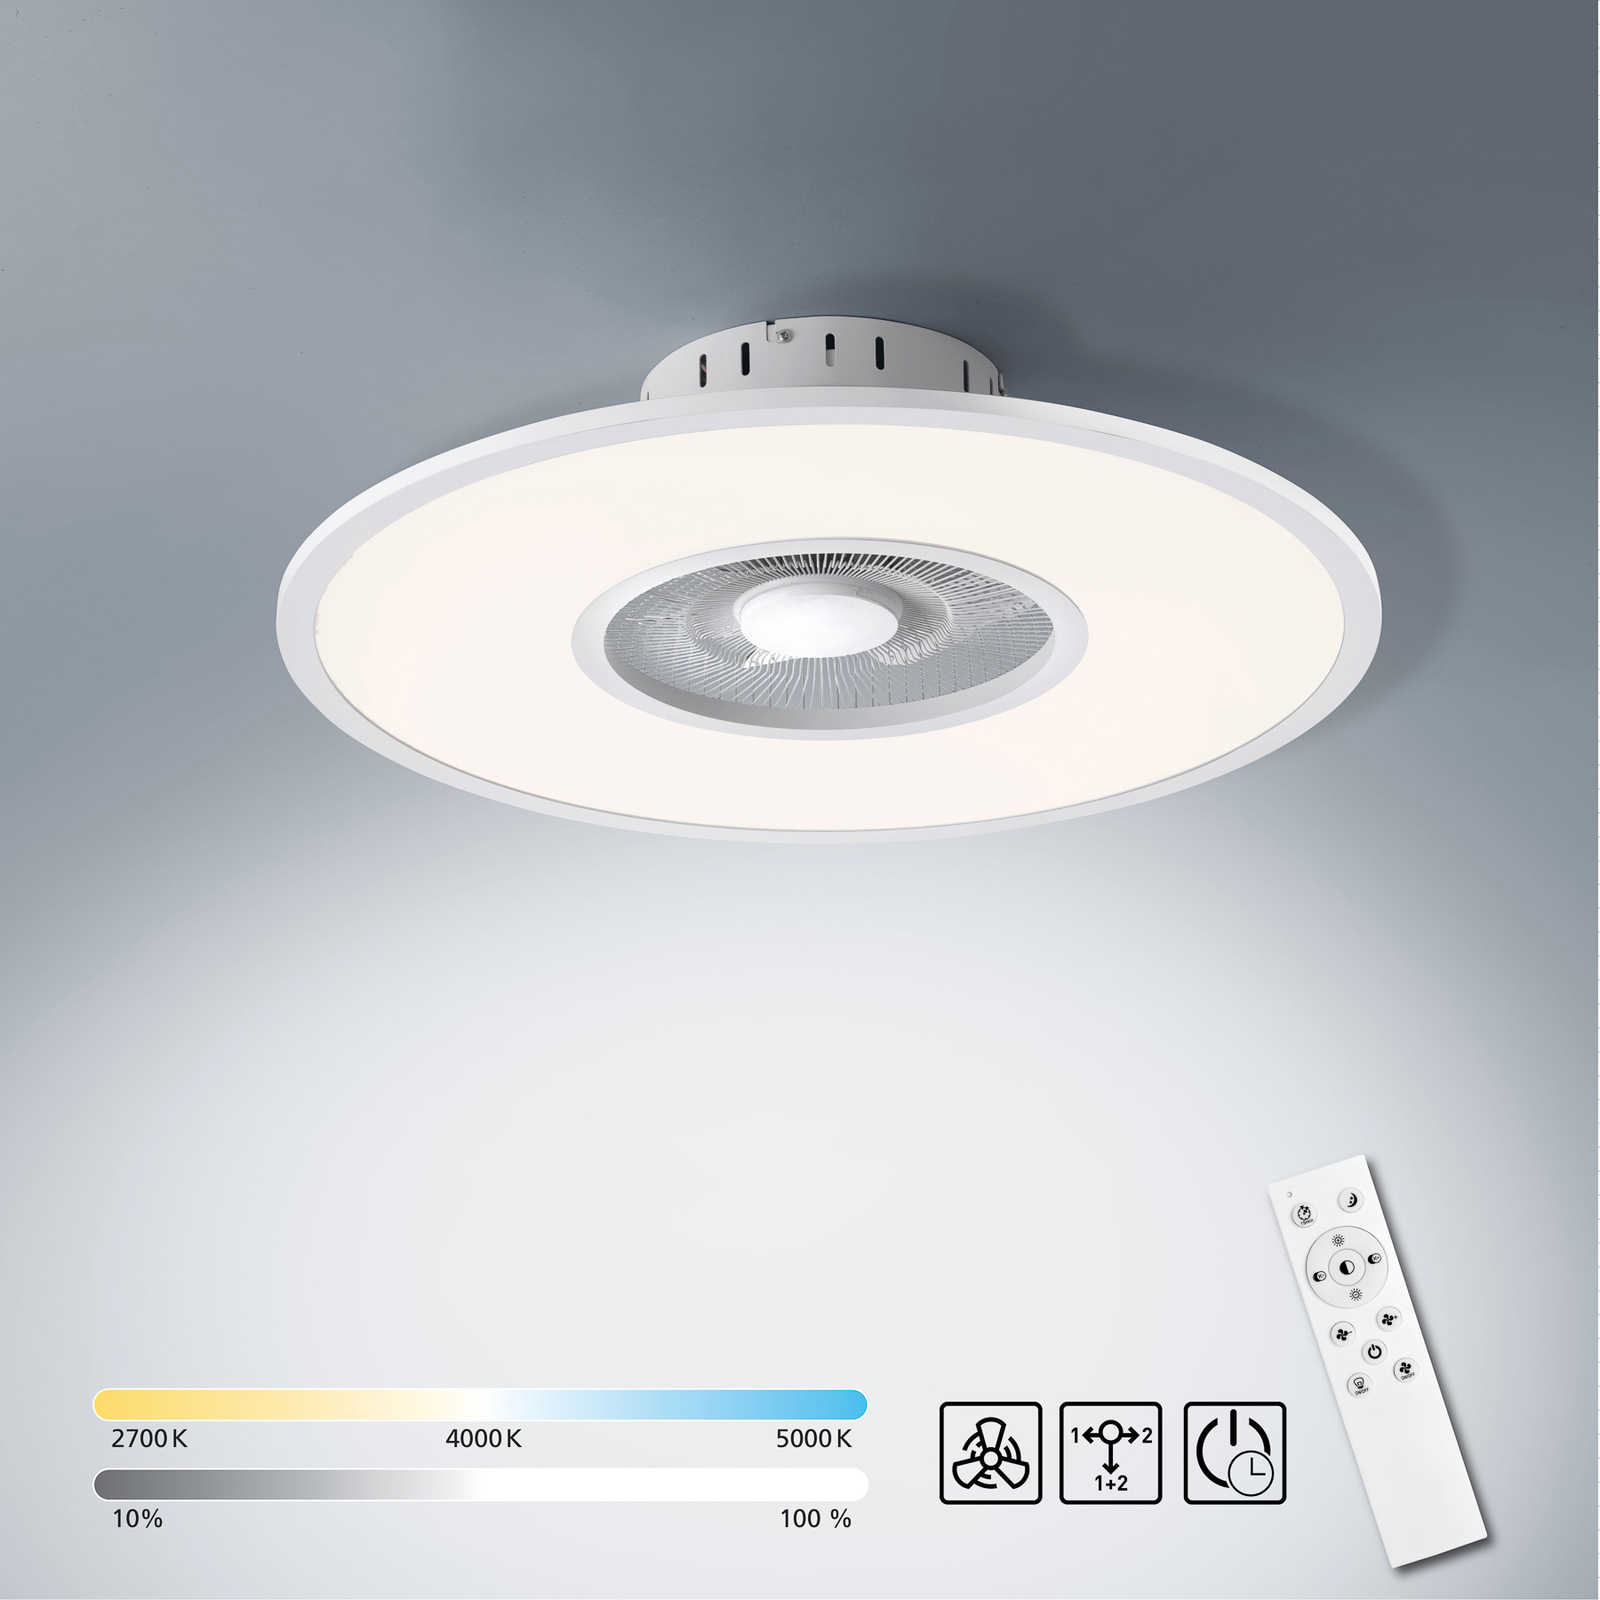 LED stropný ventilátor Flat-Air, CCT, biely, Ø 59,5 cm